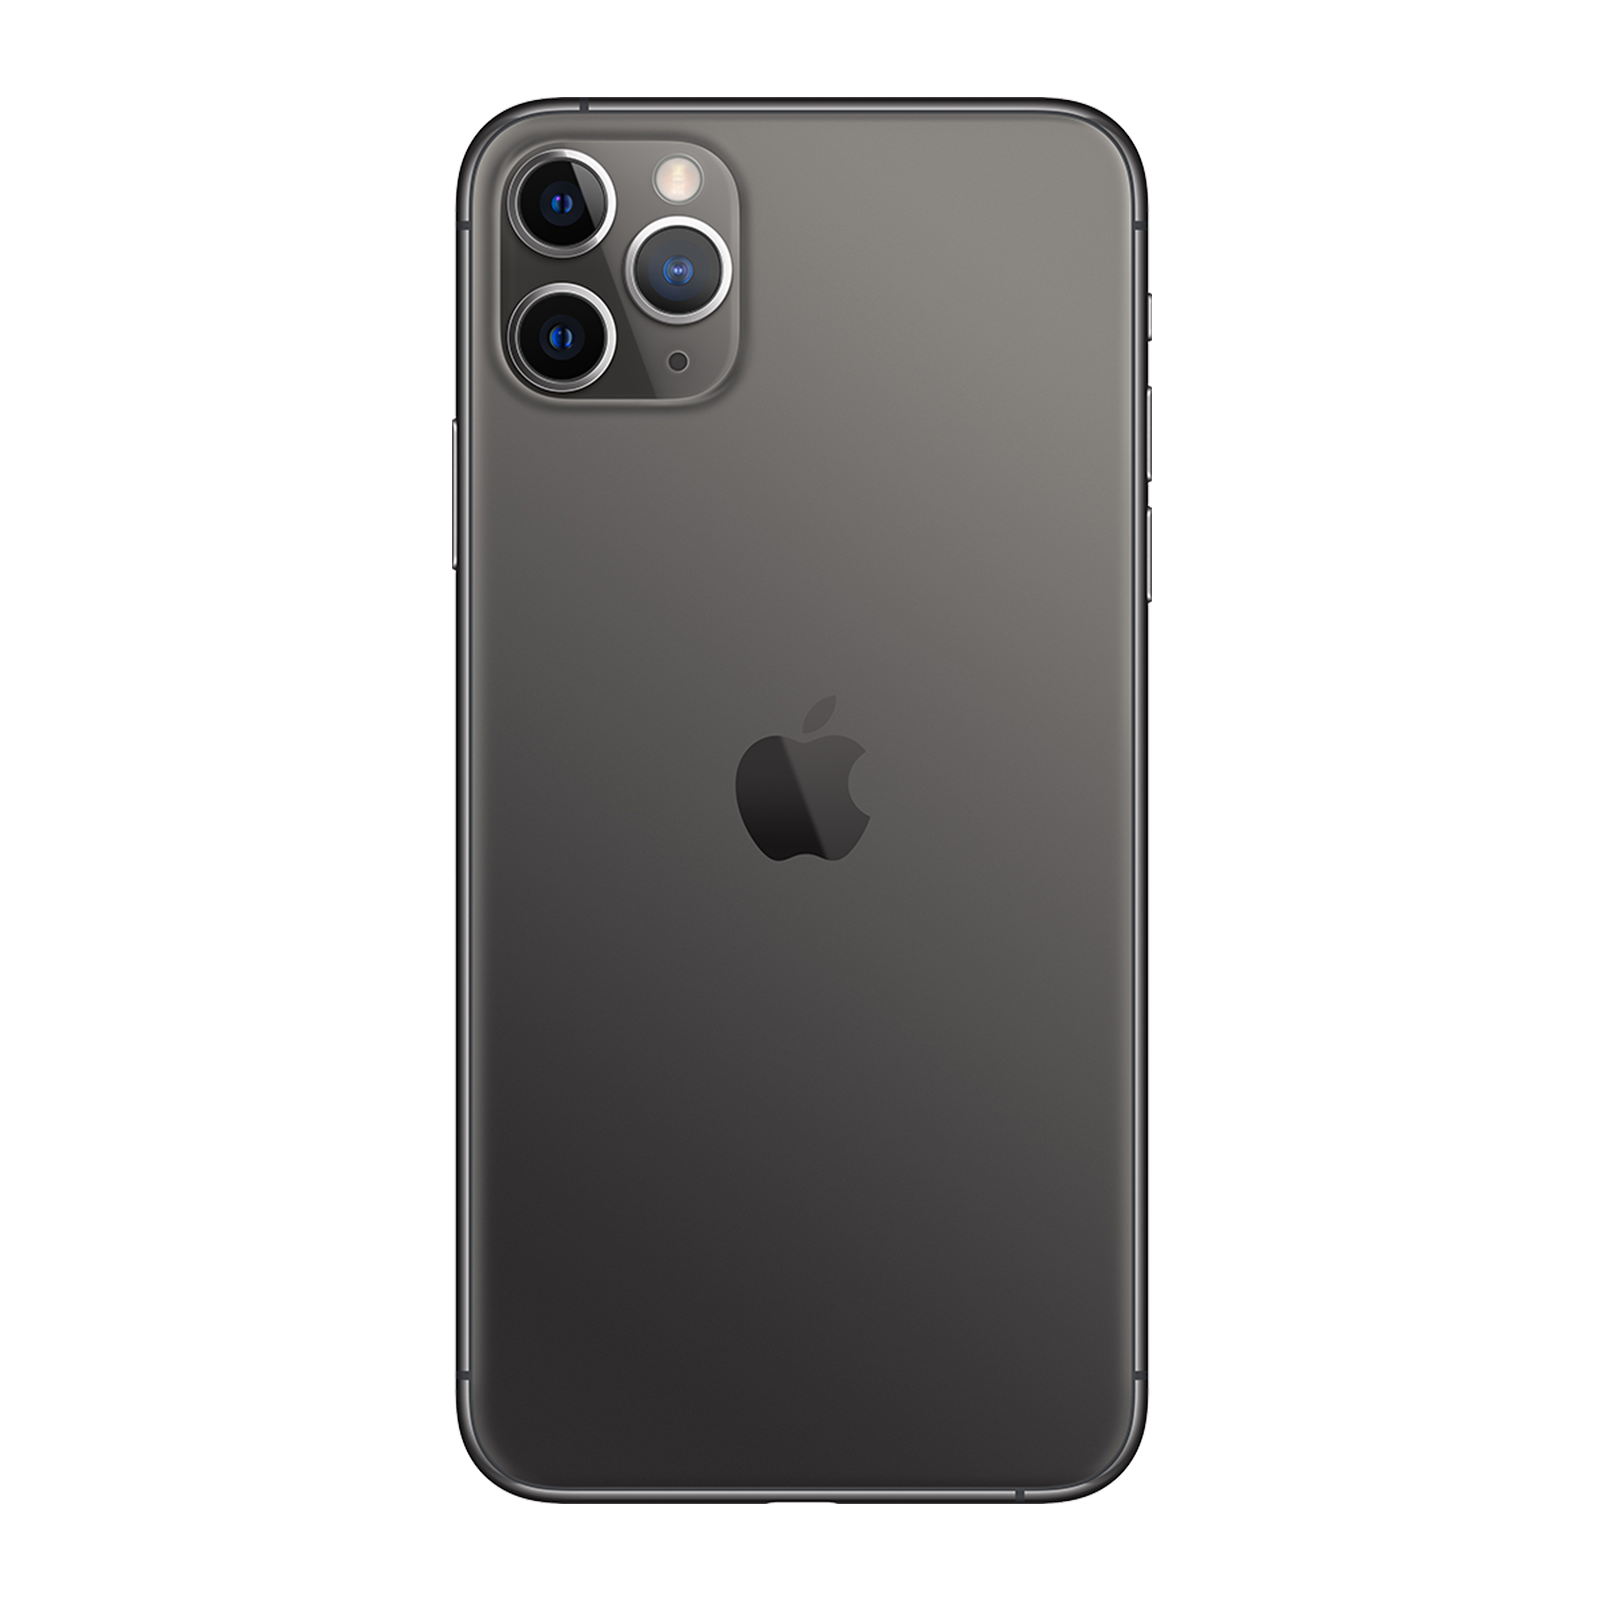 Apple iPhone 11 Pro Max 64GB Space Grey Good - Sprint